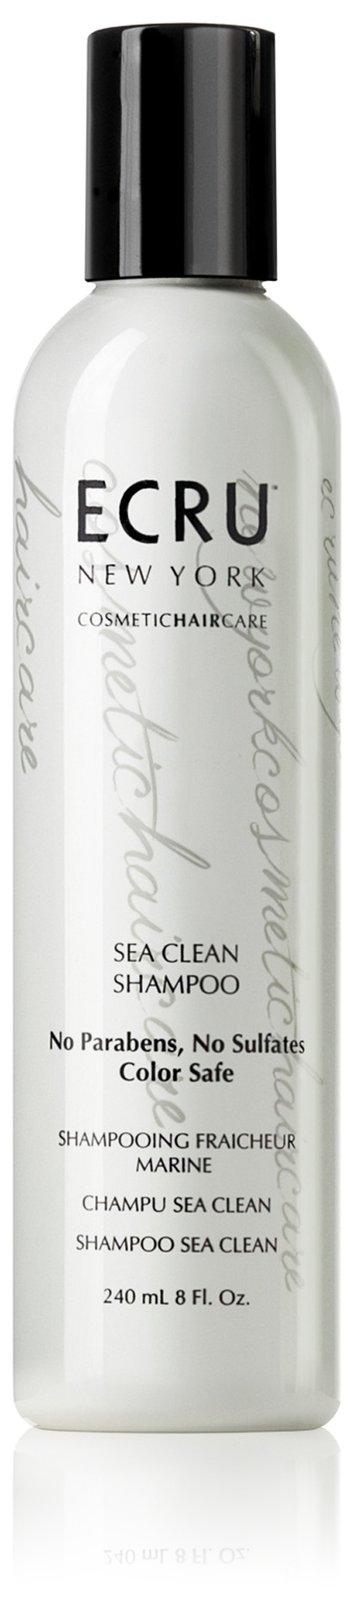 Ecru New York Sea Clean Shampoo